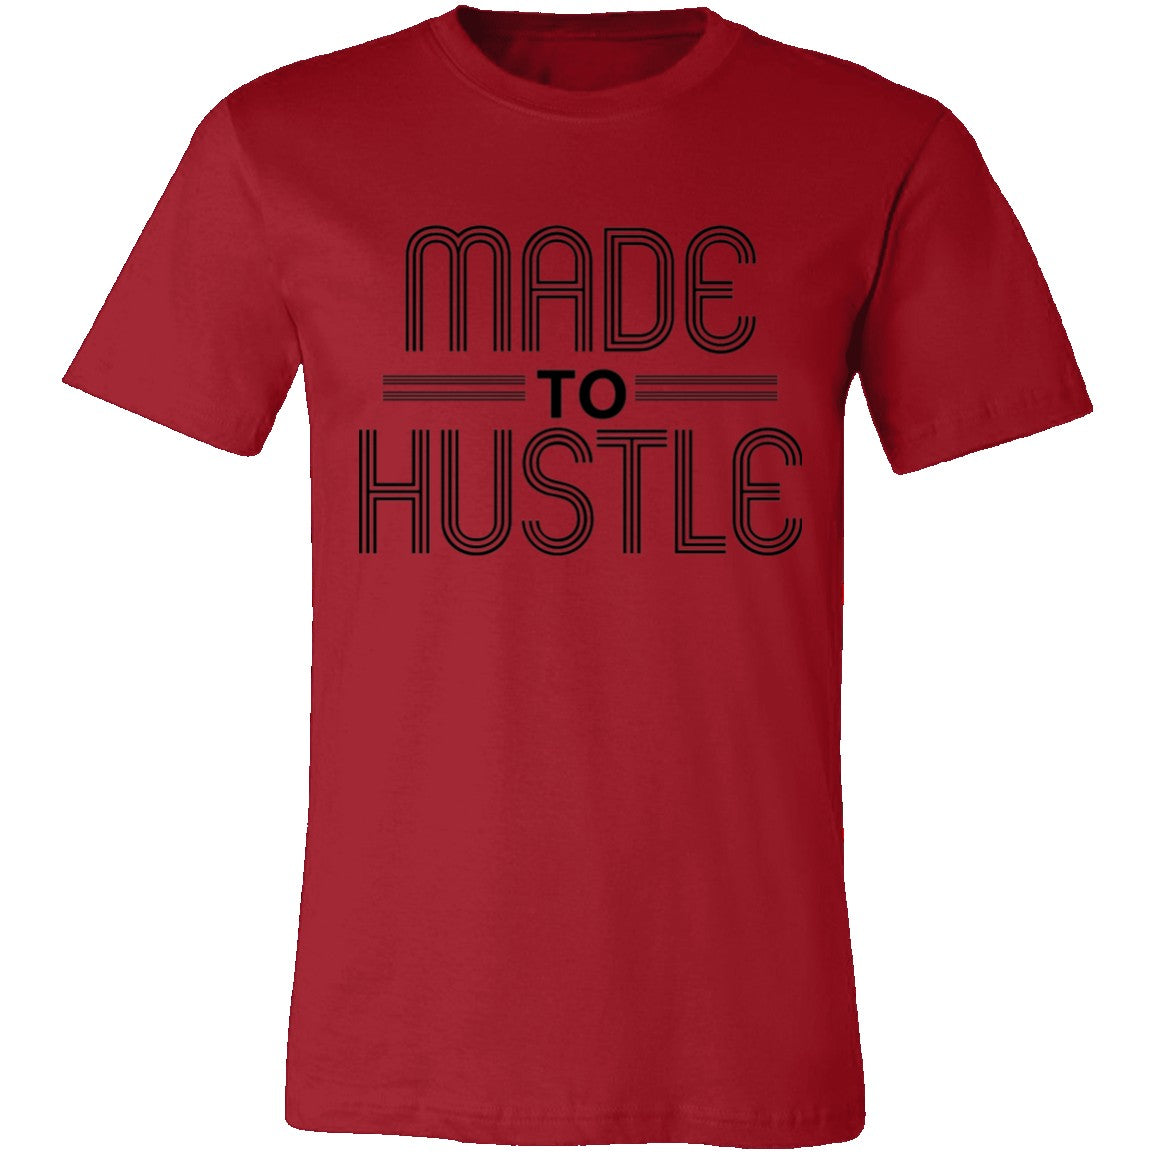 Made to Hustle Unisex Jersey Short-Sleeve T-Shirt freeshipping - Bedroka Streetwear LLC